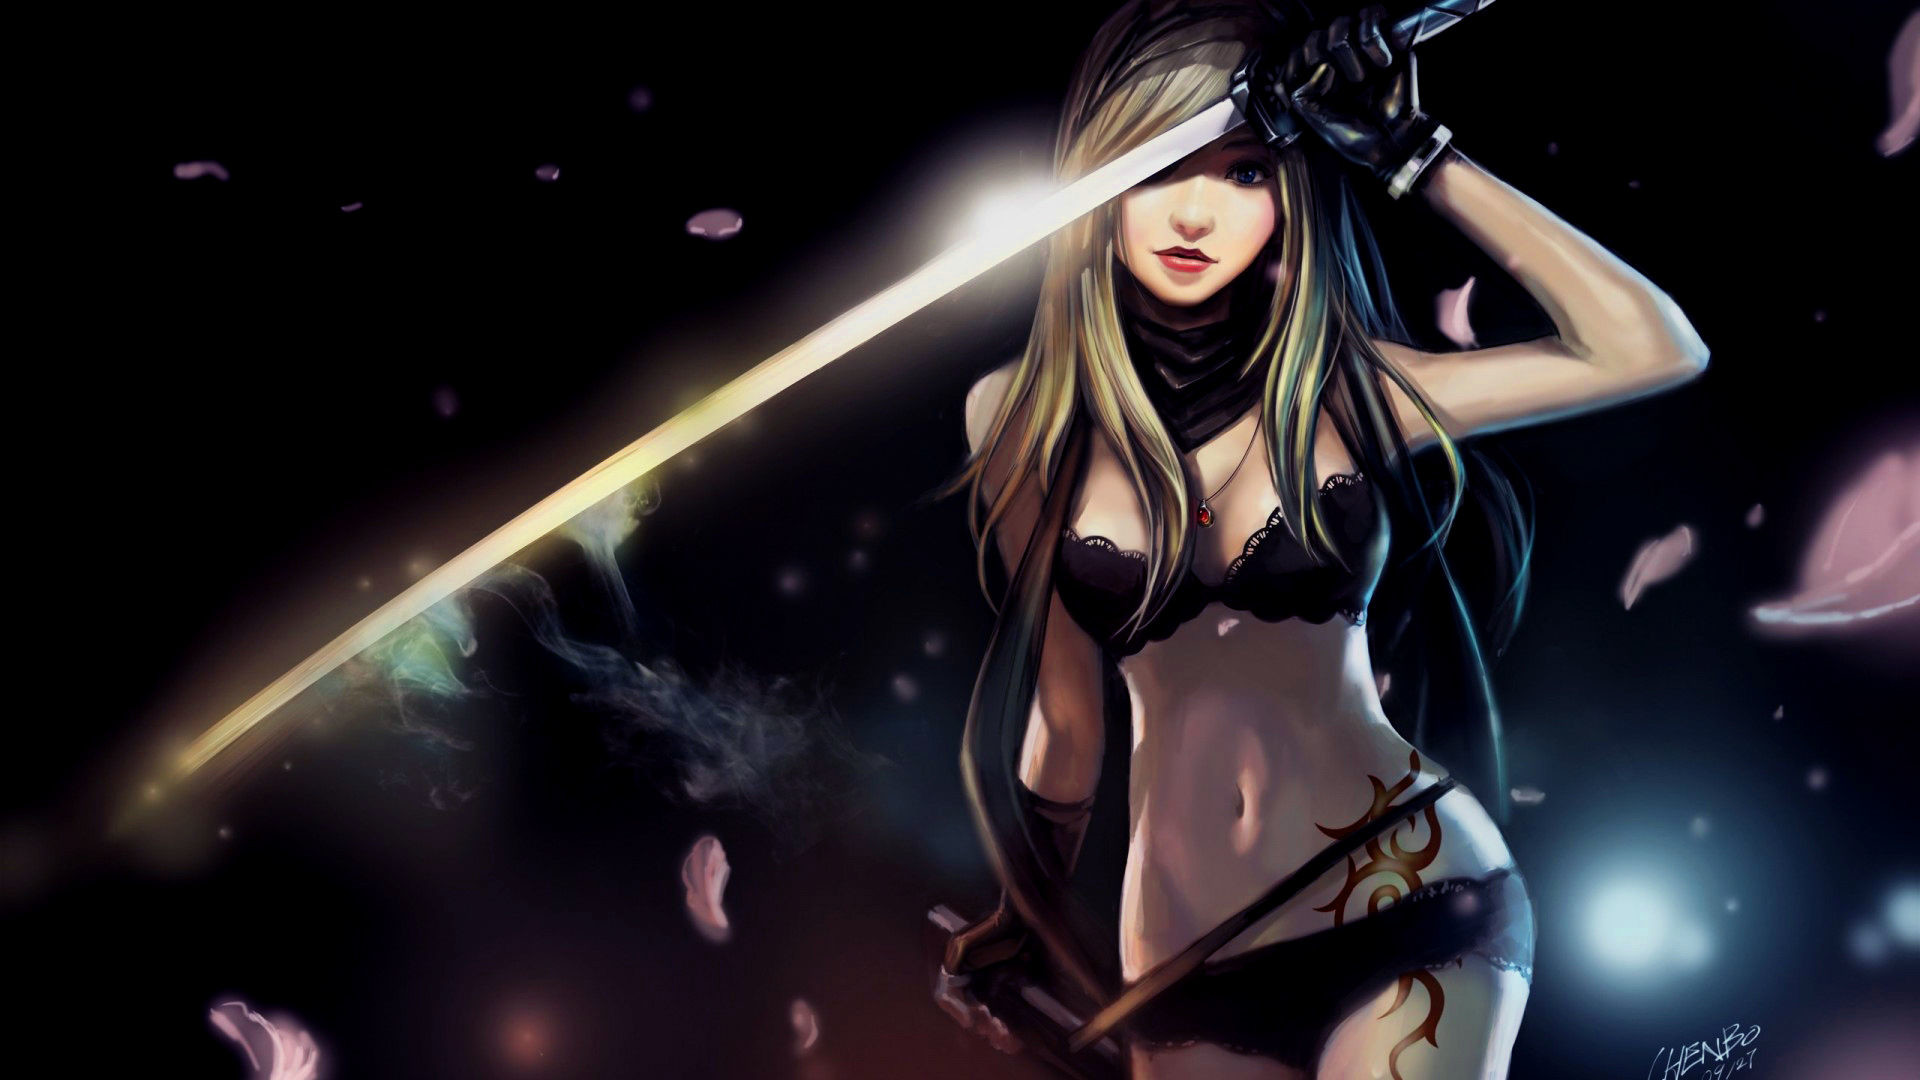 Warrior Anime Girl xHD Wallpaper on MobDecor